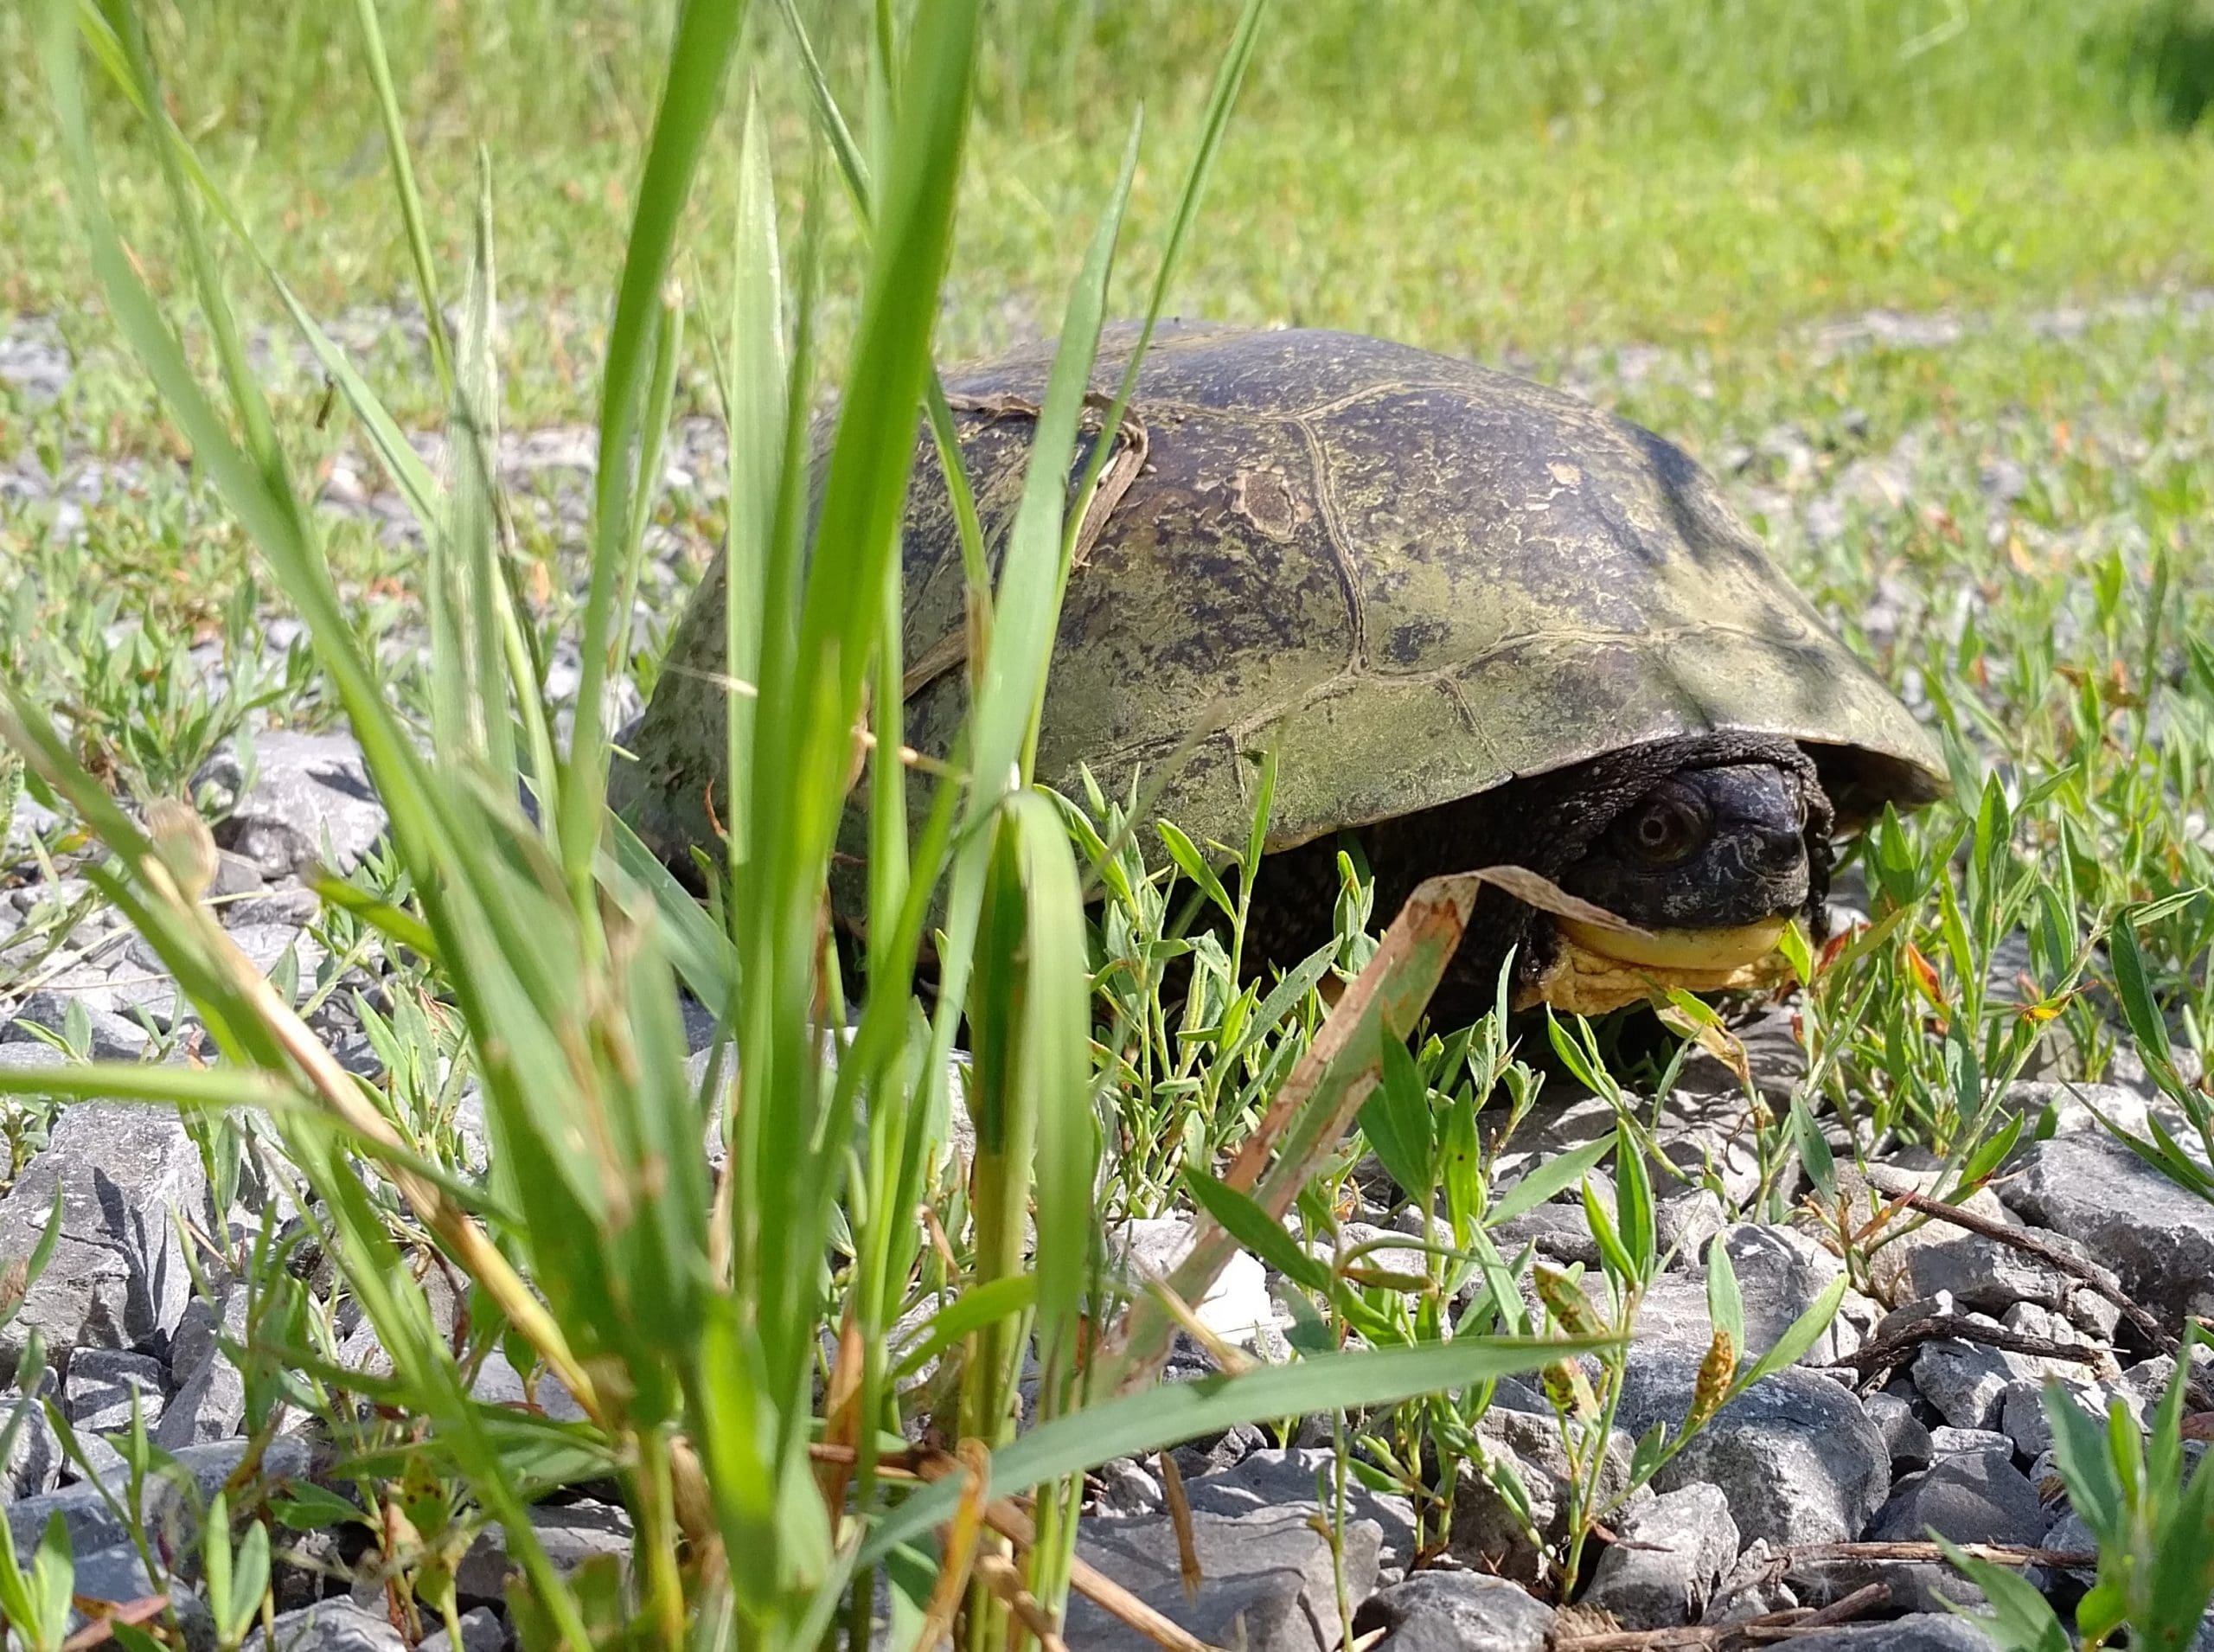 Shell shock: Ontario’s turtle emergency